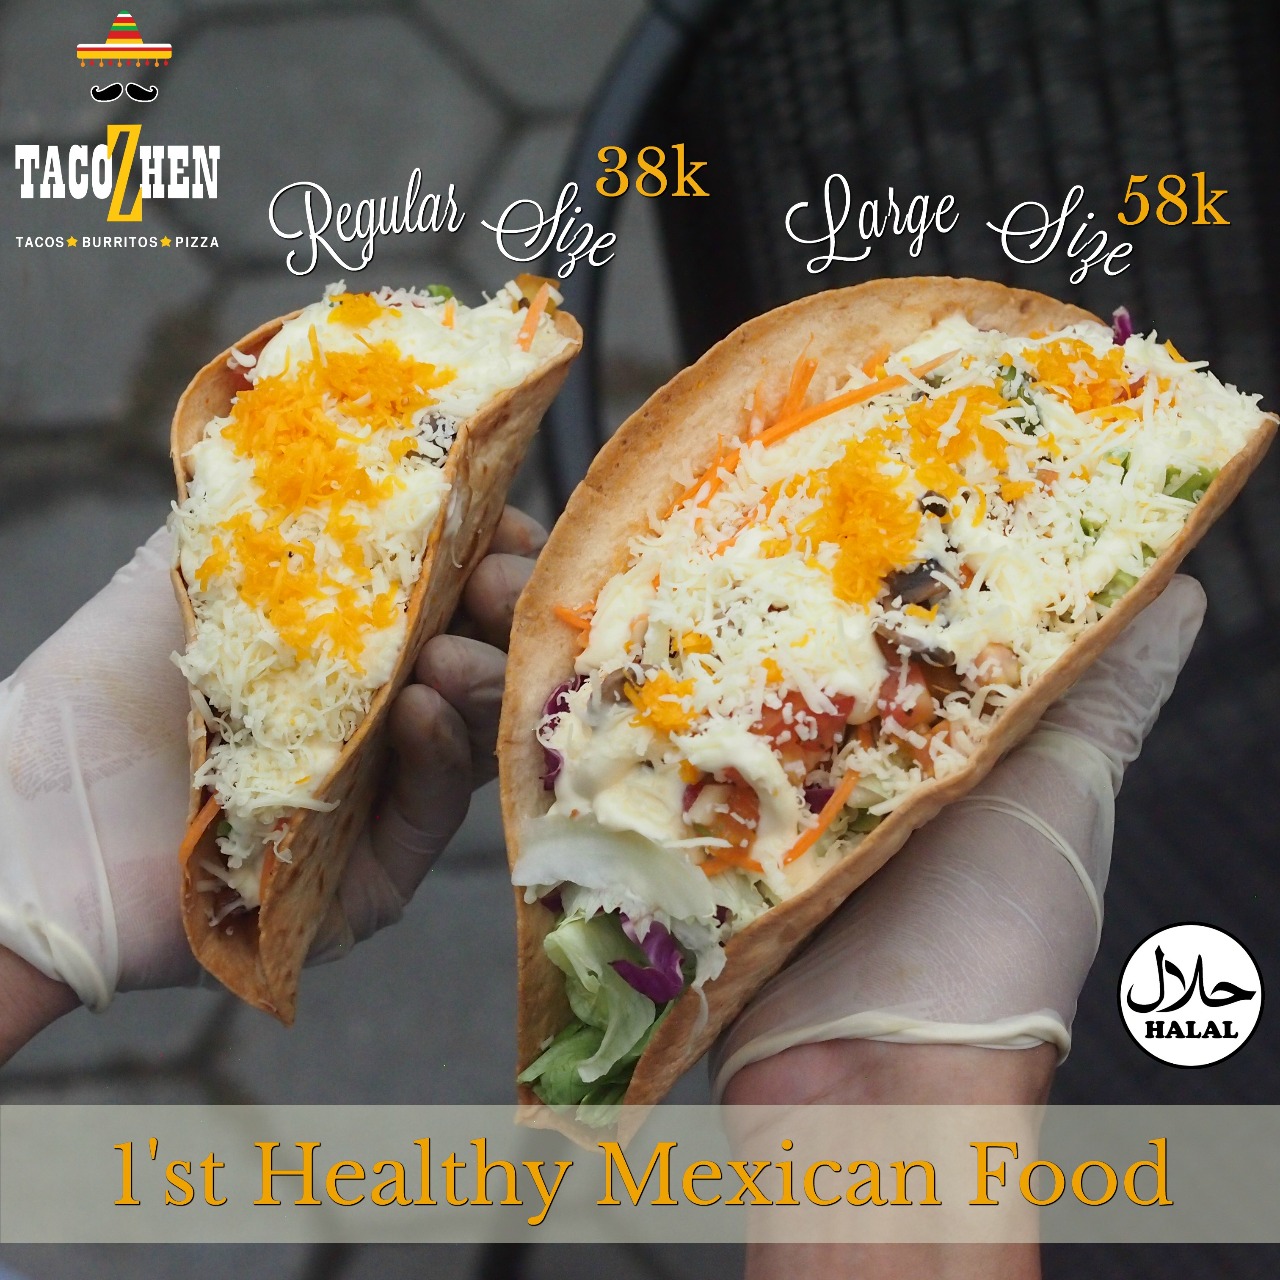 Mengenal Tacozhen, Kuliner Sehat ala Meksiko